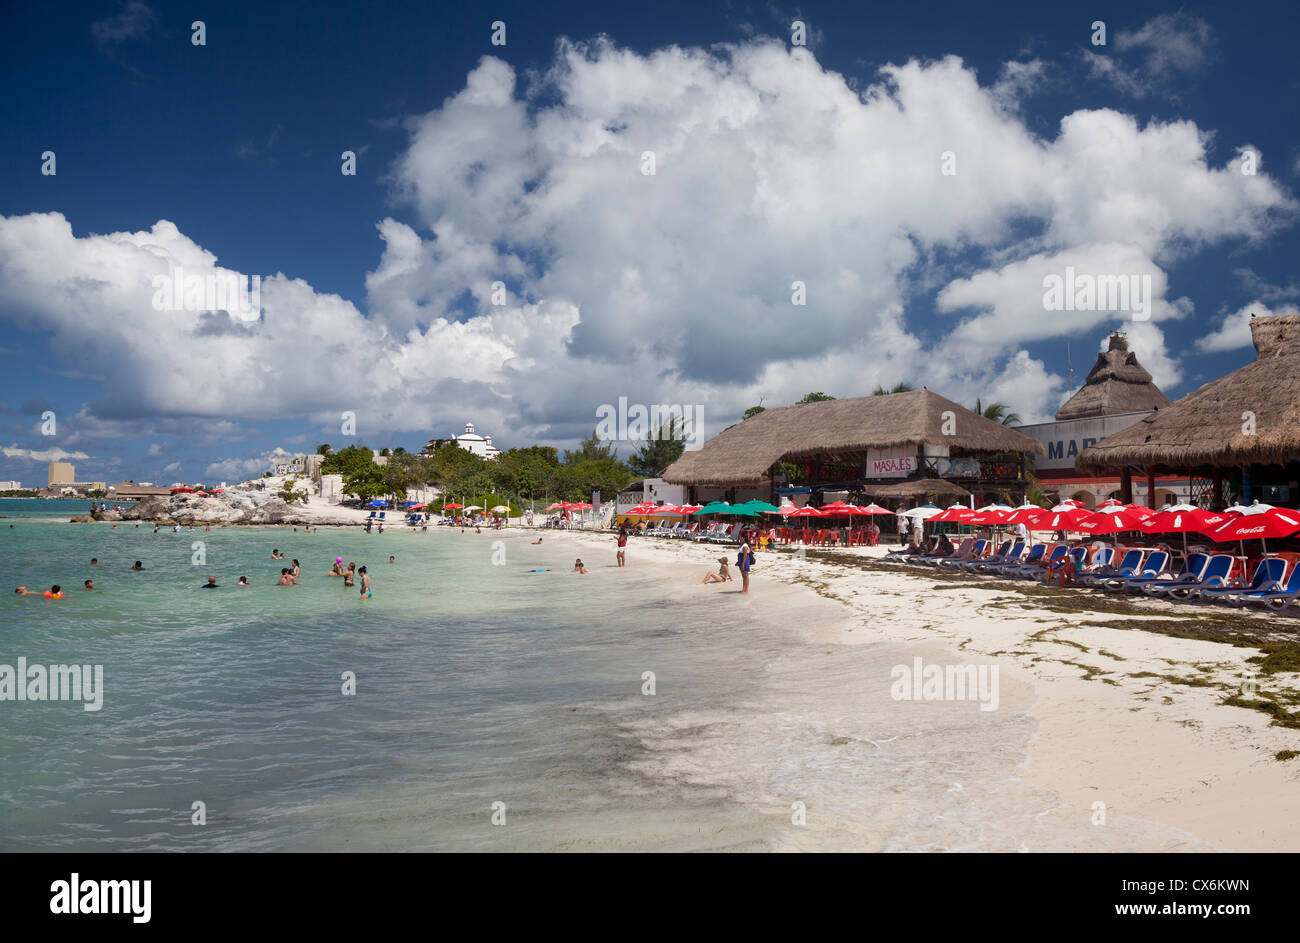 Playa Tortuga Beach, Cancun, Mexico Stock Photo